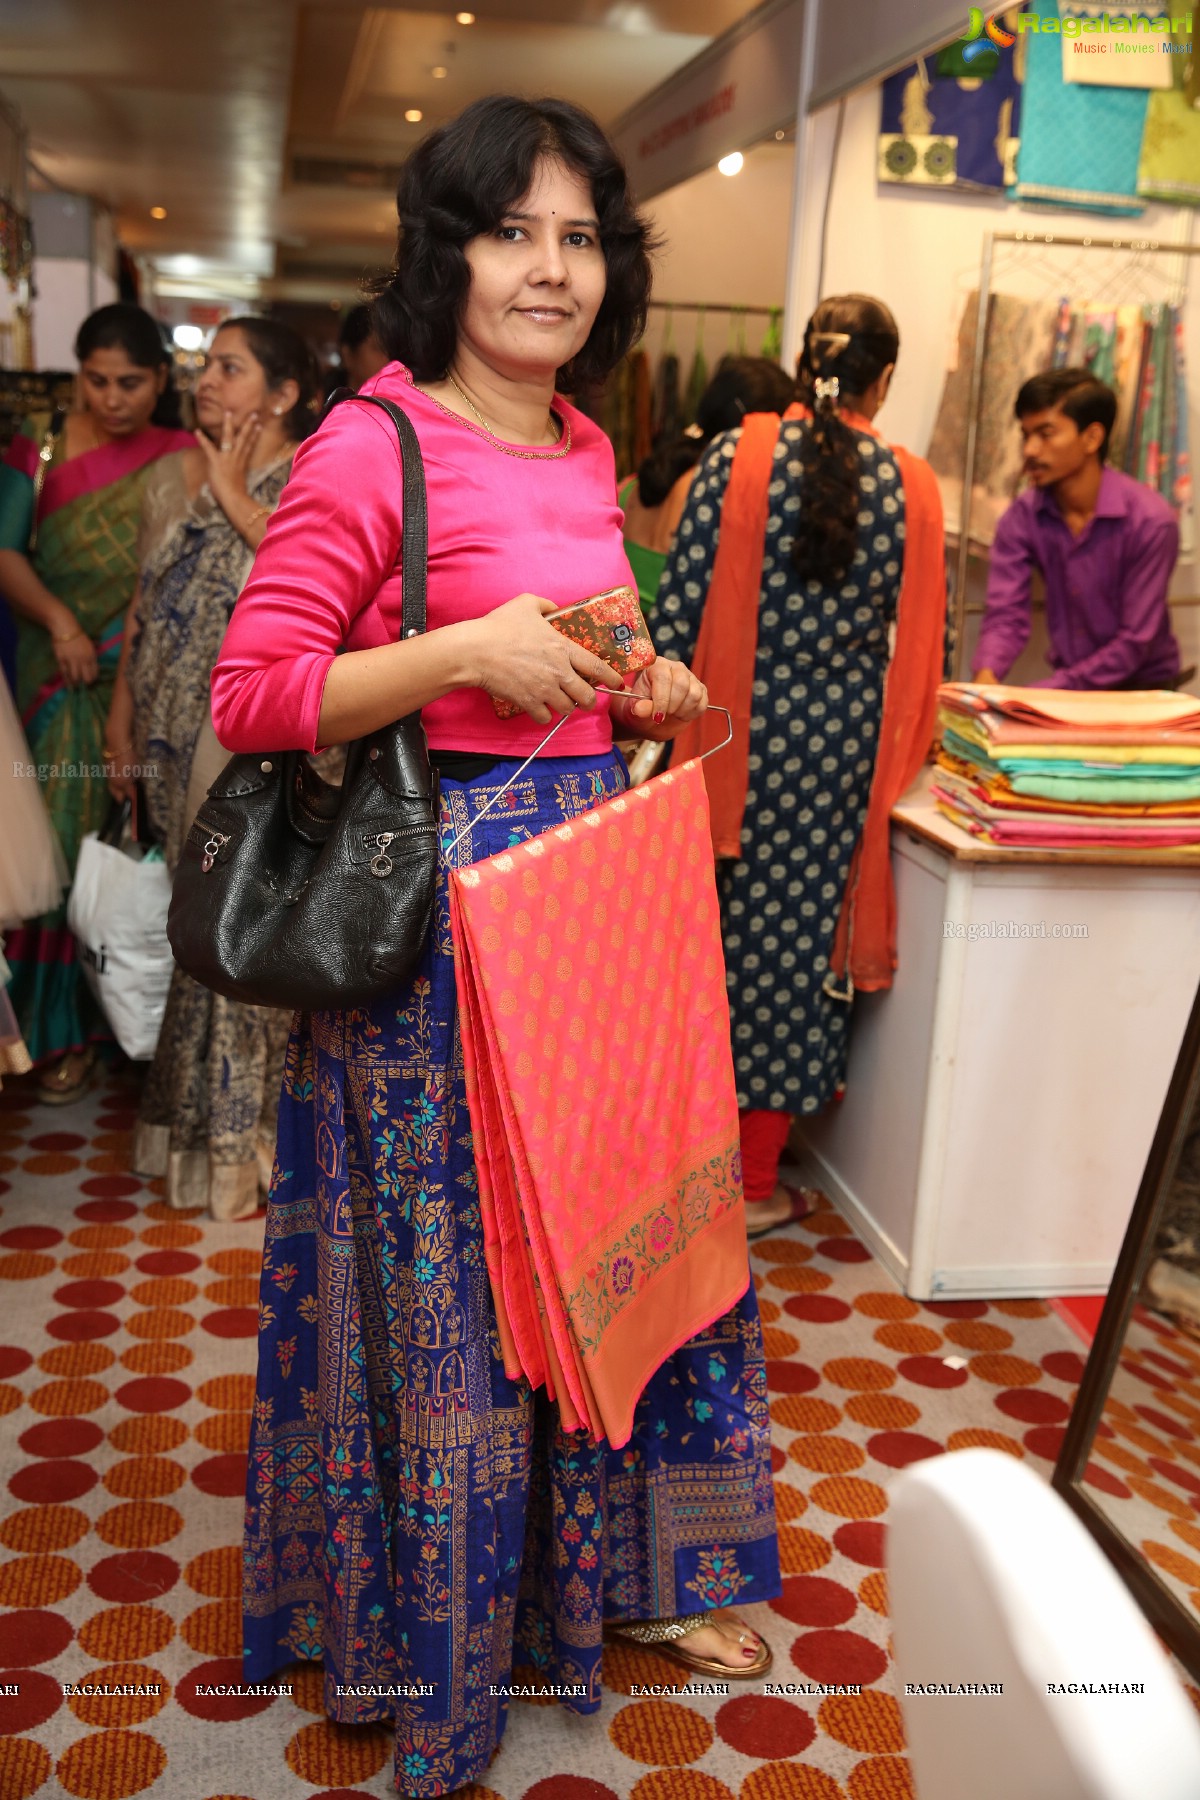 Label Love Exhibition & Sale at Taj Krishna, Hyderabad